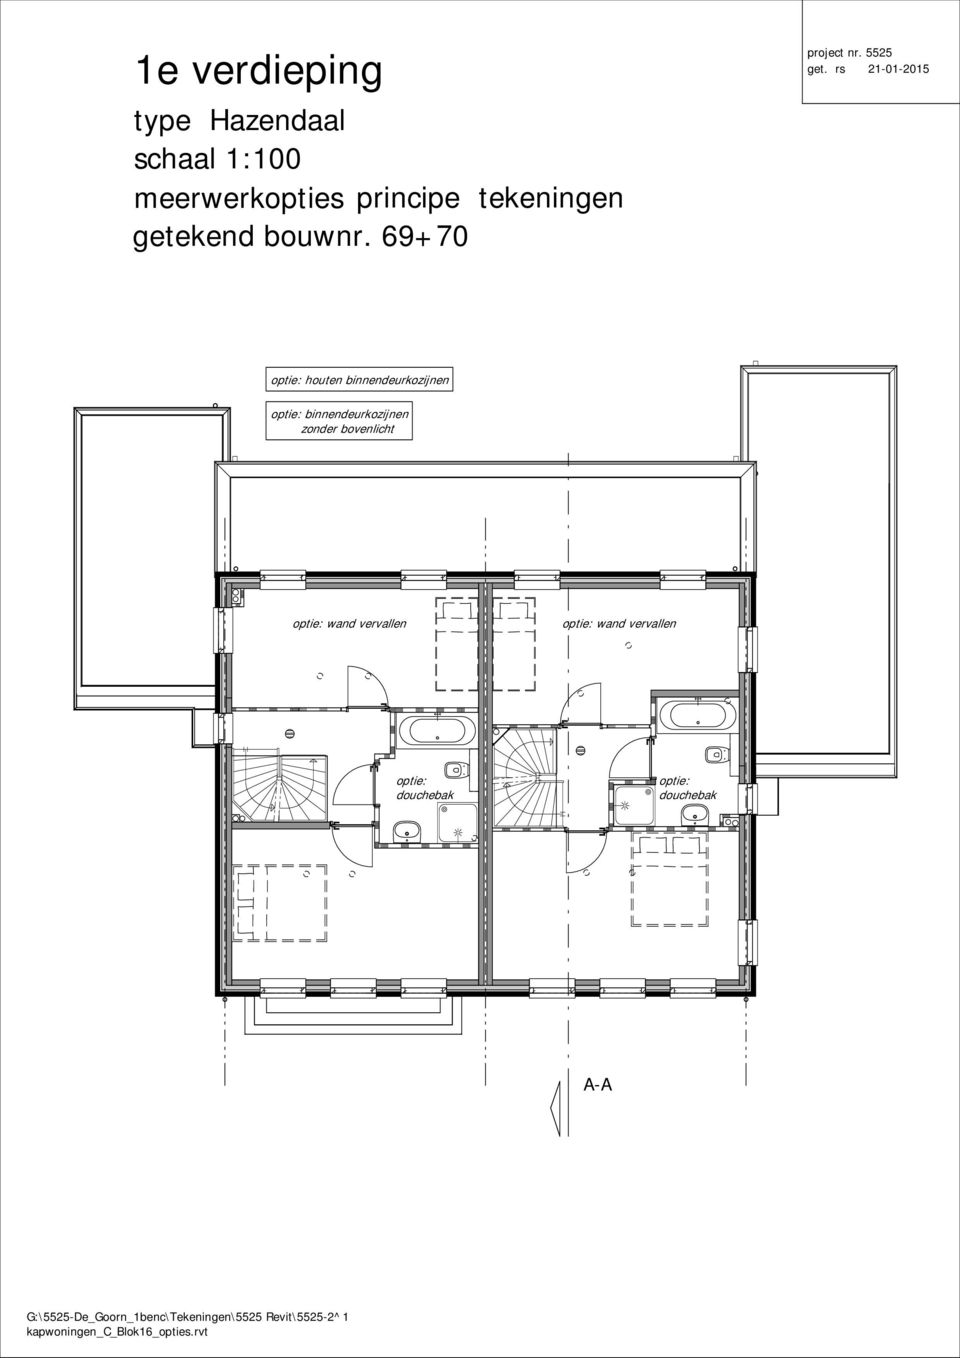 rs 21-01-2015 houten binnendeurkozijnen binnendeurkozijnen zonder bovenlicht wand